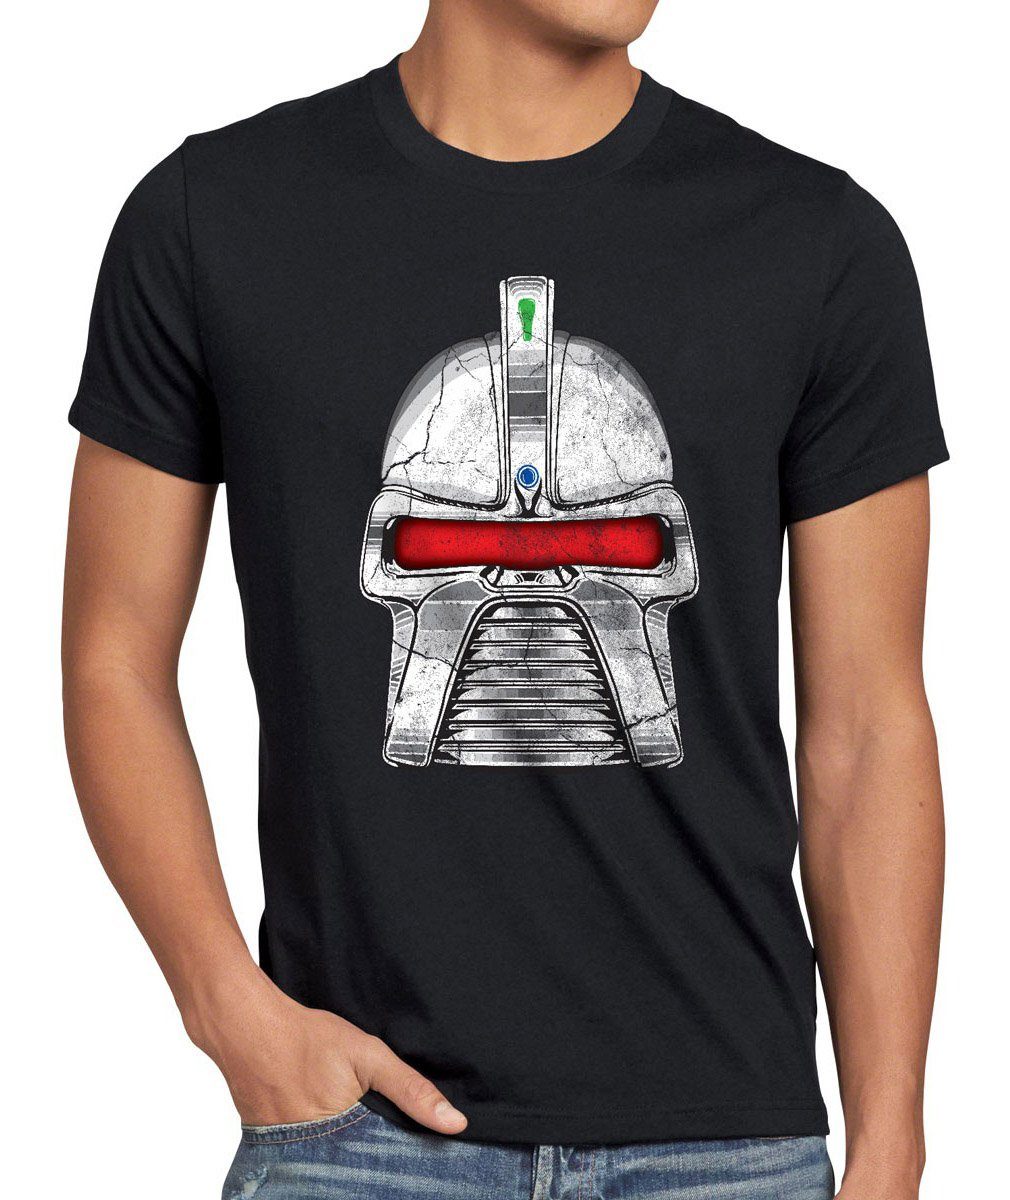 style3 Print-Shirt Herren T-Shirt trooper wars cooper Zylon theory star bang schwarz Big Sheldon galactica